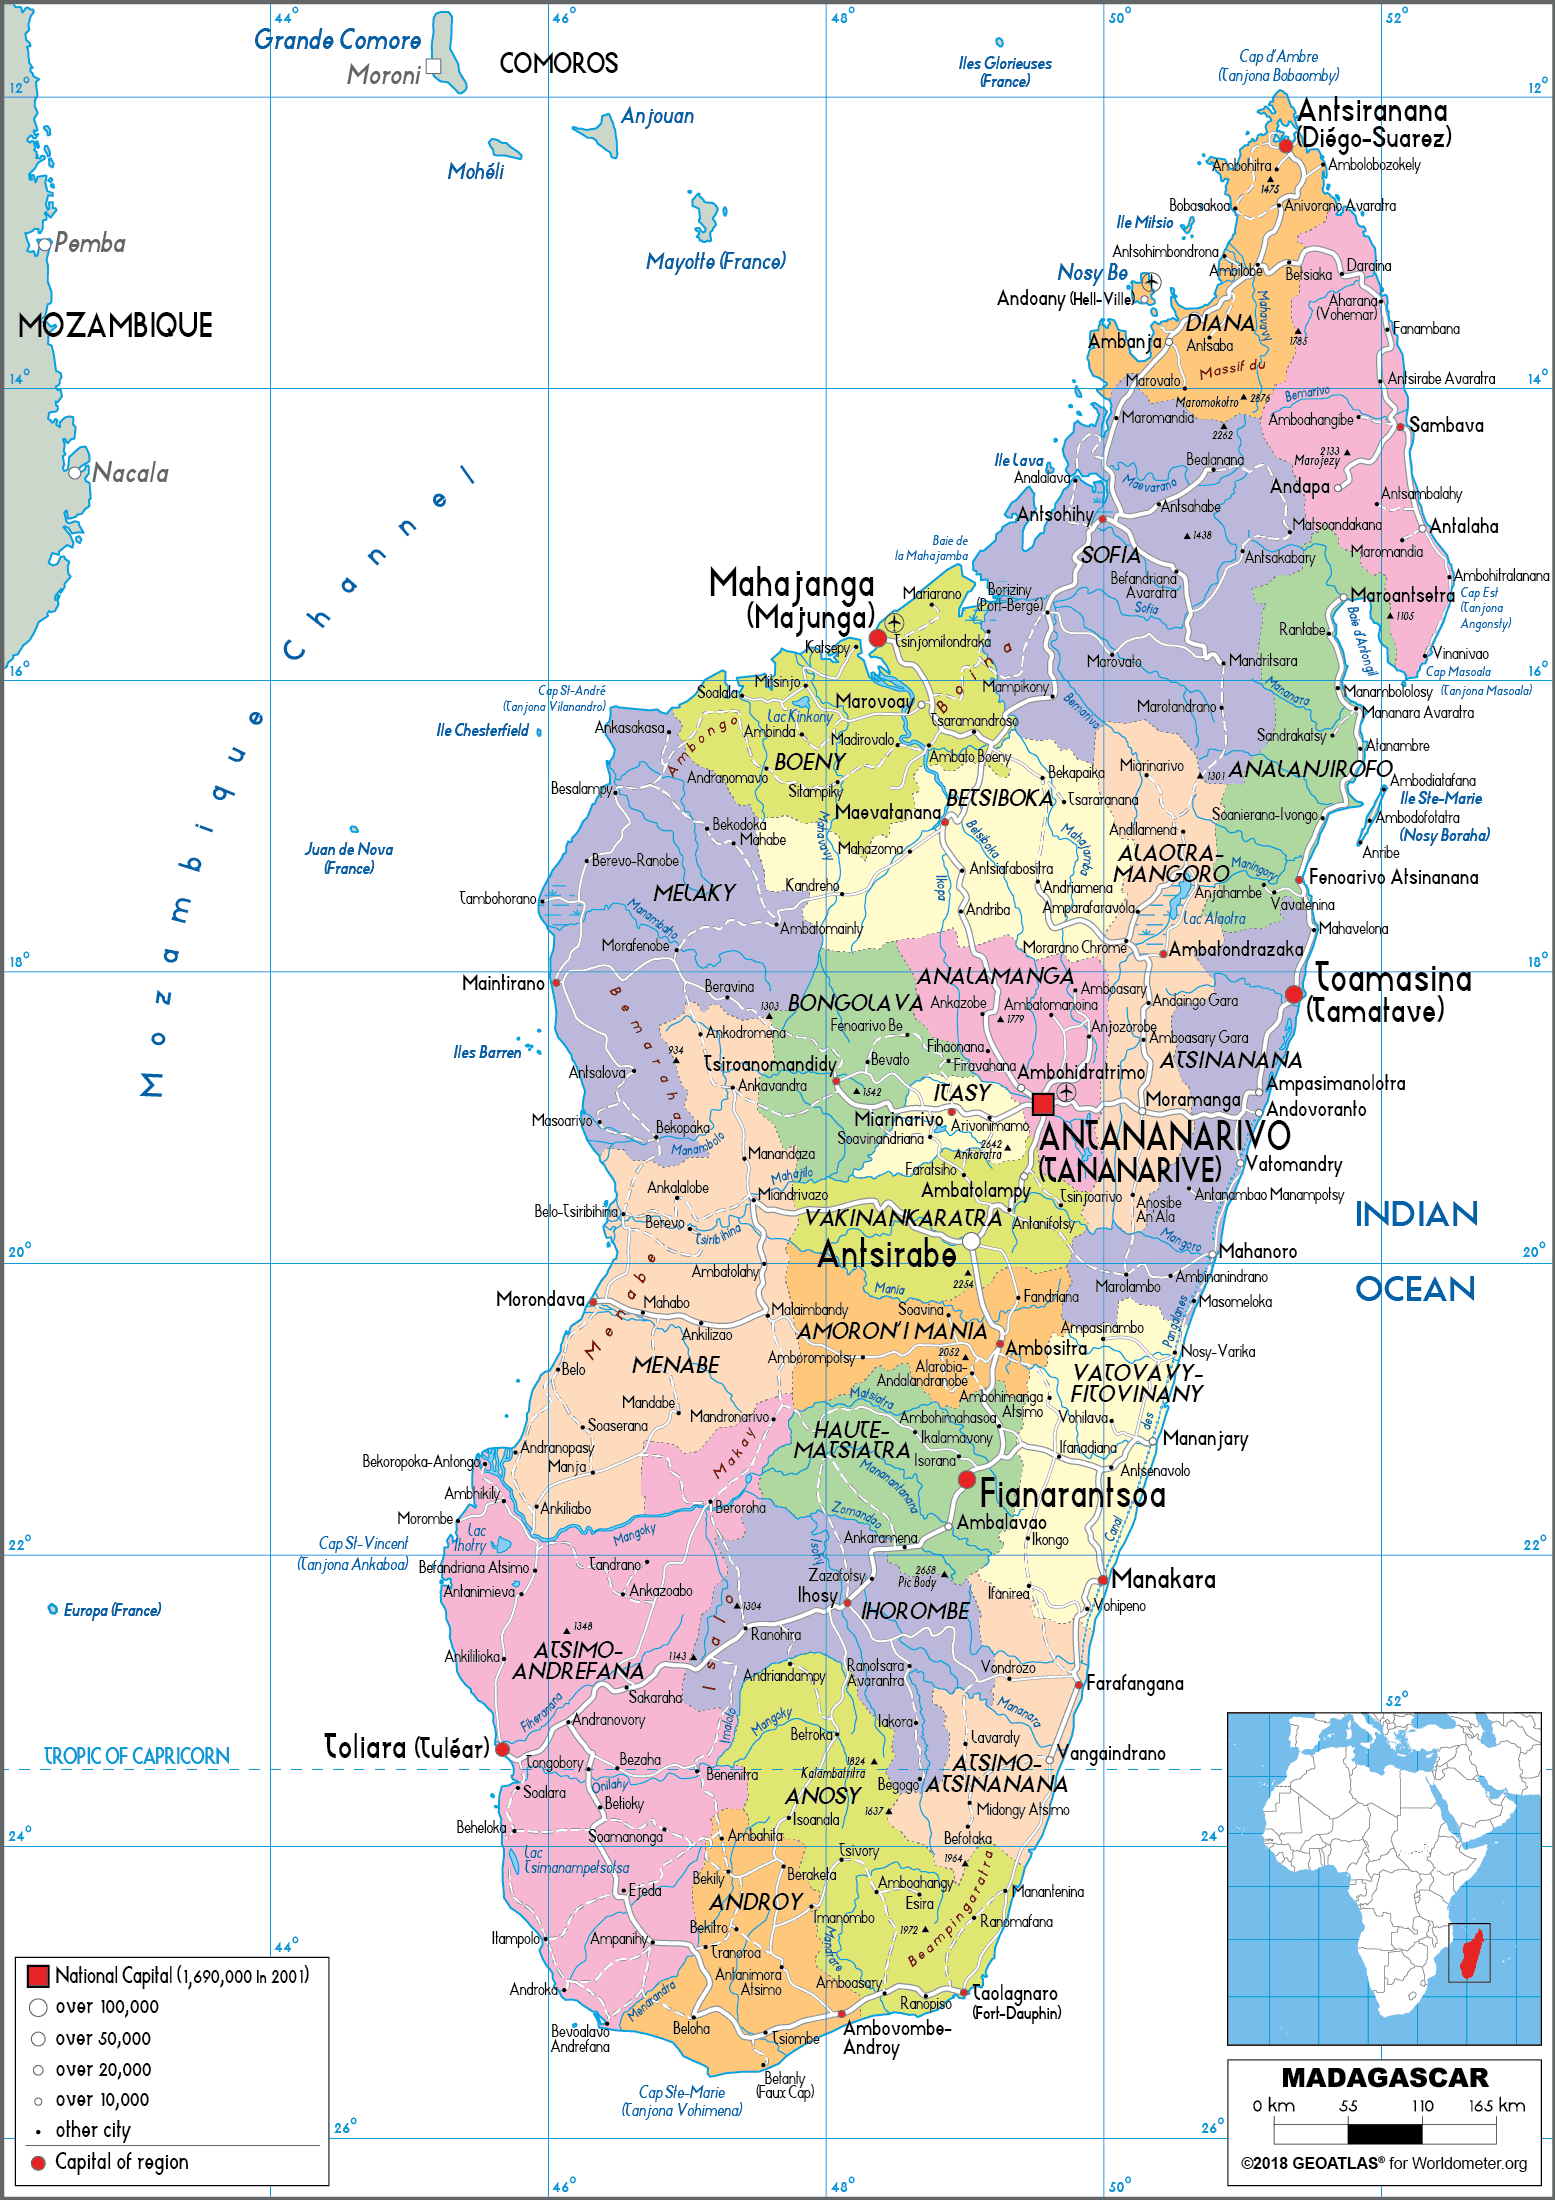 Large size Political Map of Madagascar - Worldometer